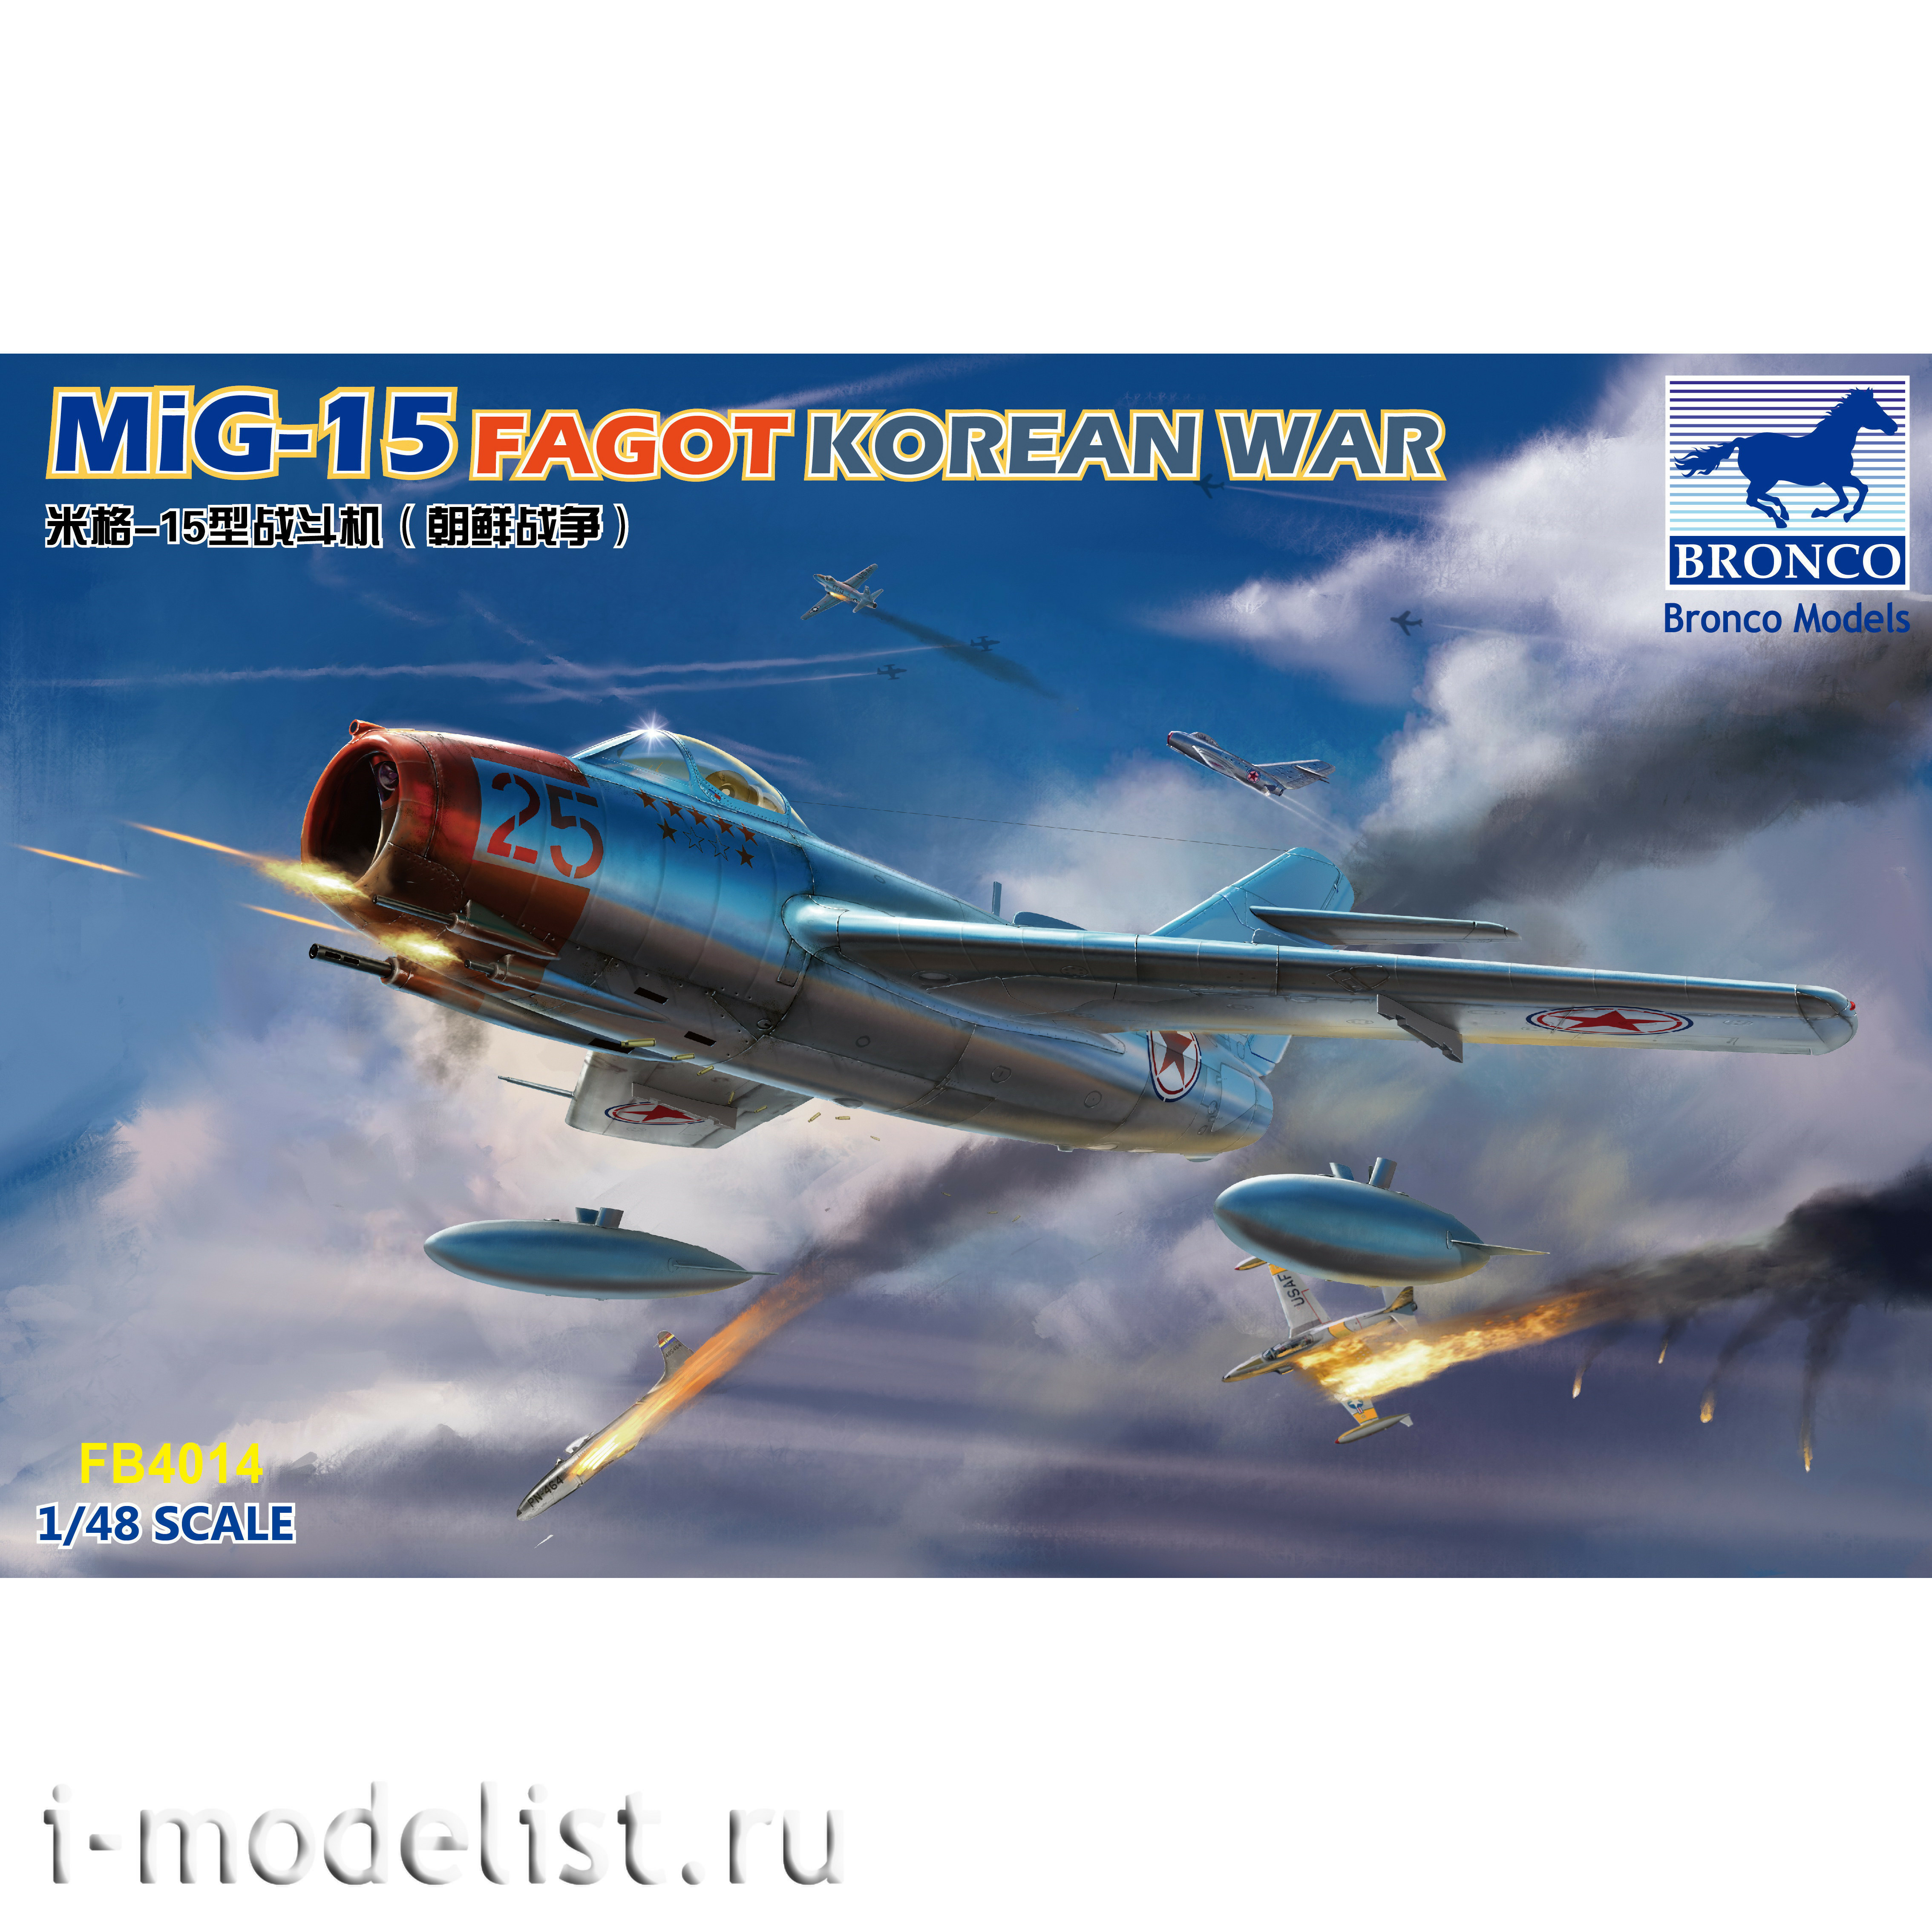 FB4014 Bronco 1/48 Scale Model MiG-15 